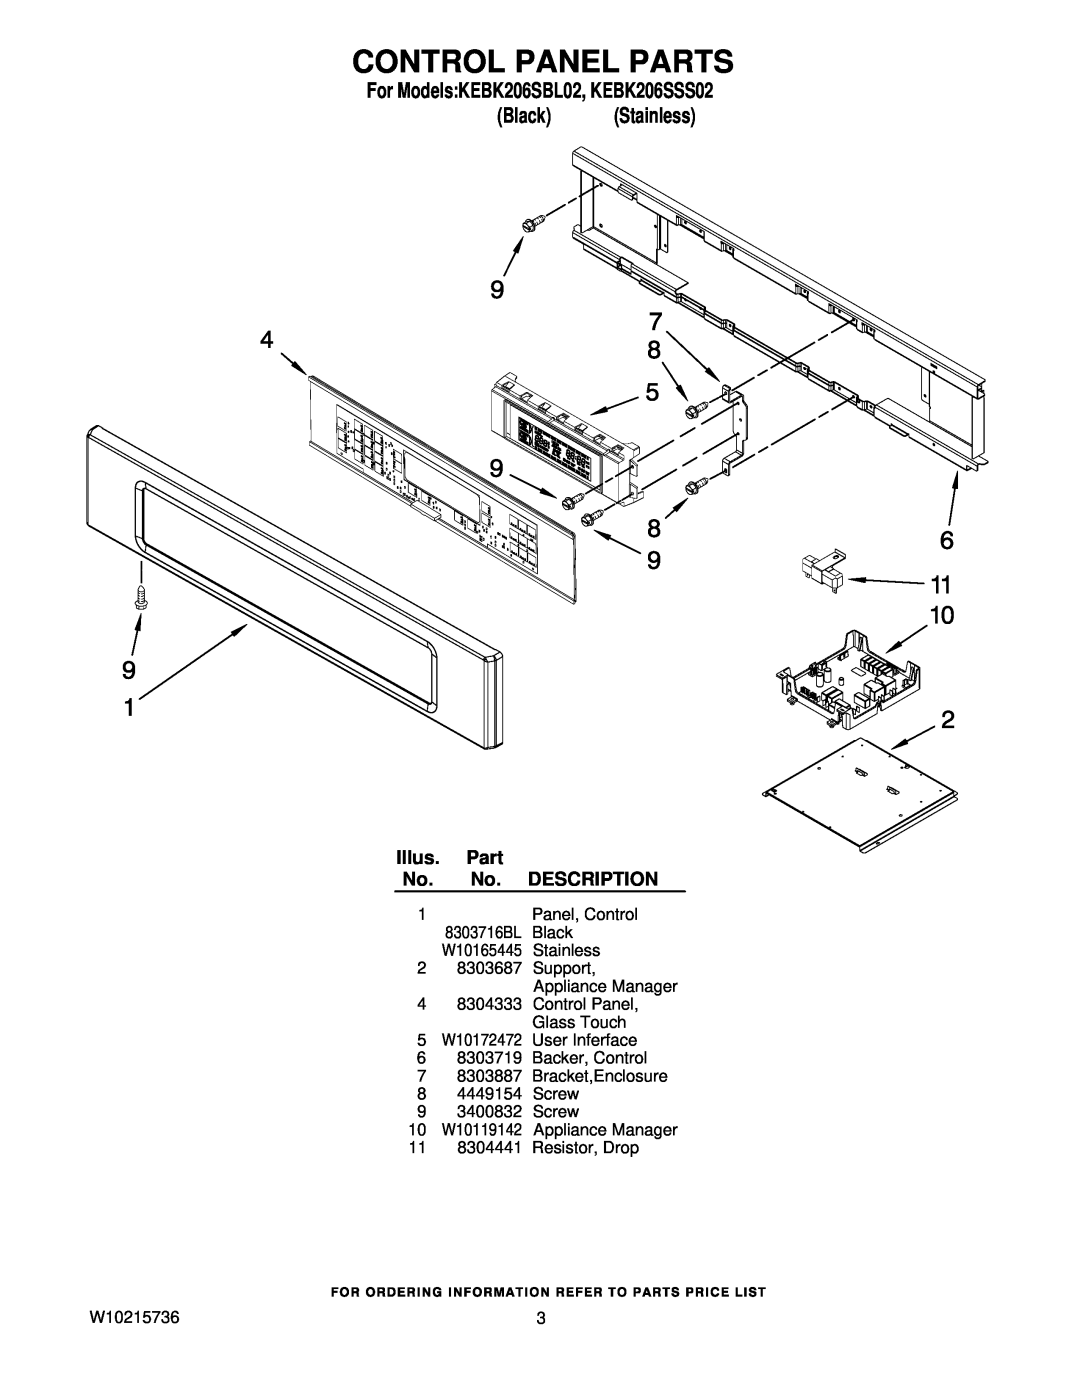 KitchenAid manual Control Panel Parts, For ModelsKEBK206SBL02, KEBK206SSS02 Black Stainless, Panel, Control, W10215736 